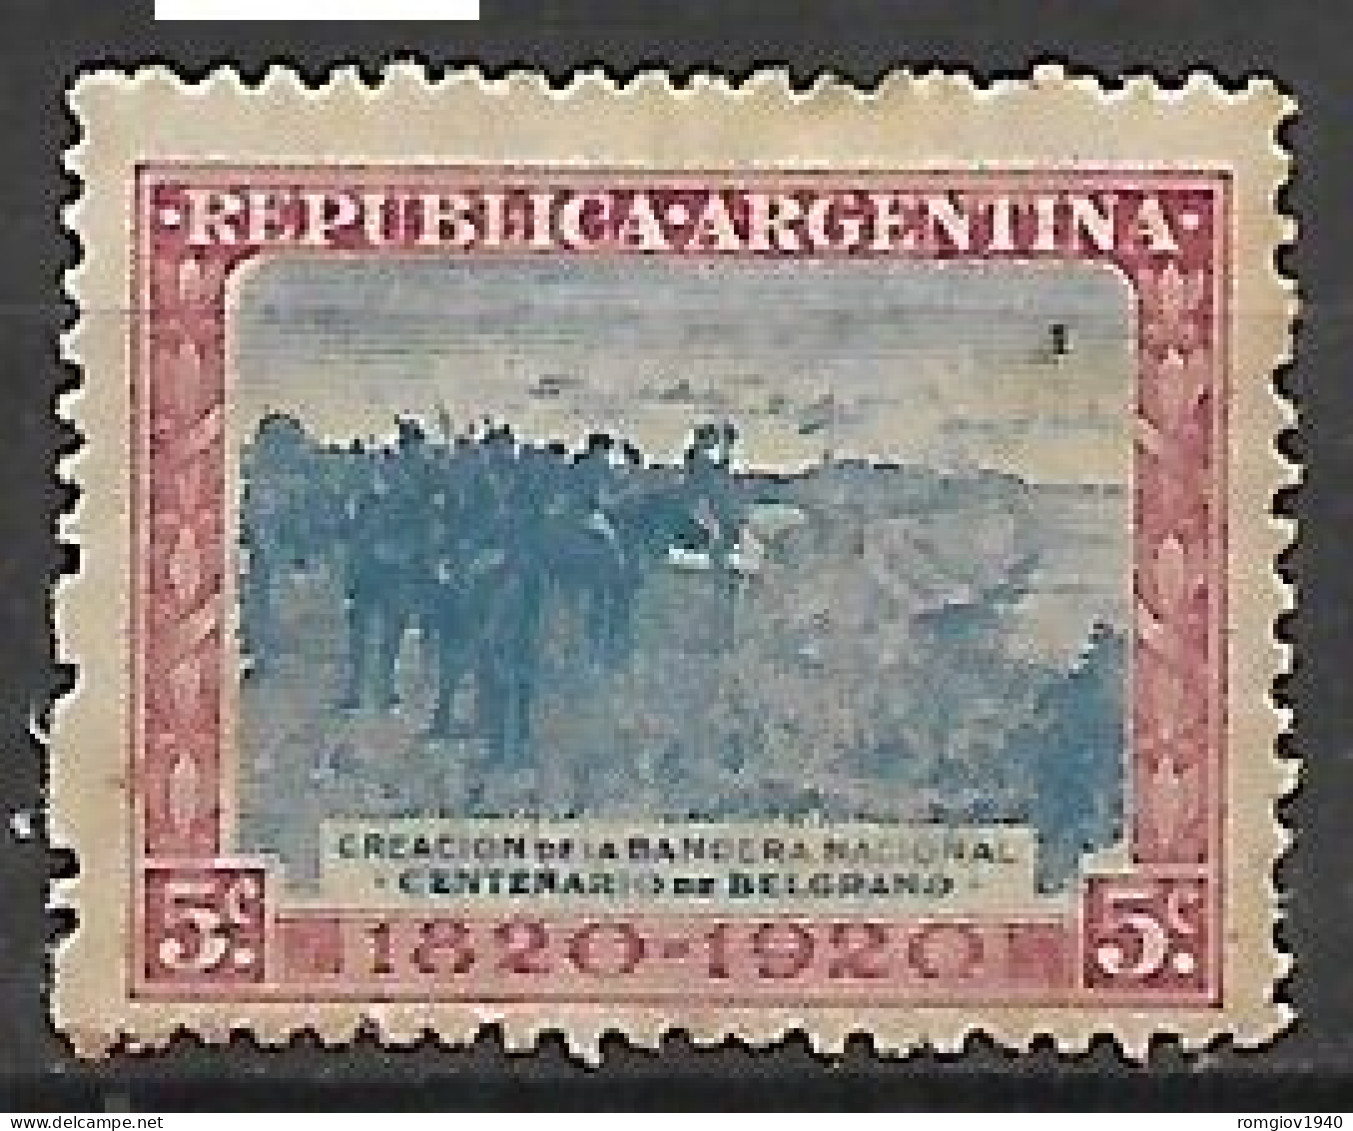 ARGENTINA  1920  CENTENARIO DELLA  MORTE DEL GENERALE MANUEL BELGRANO  YVERT. 253 MLH VF - Neufs